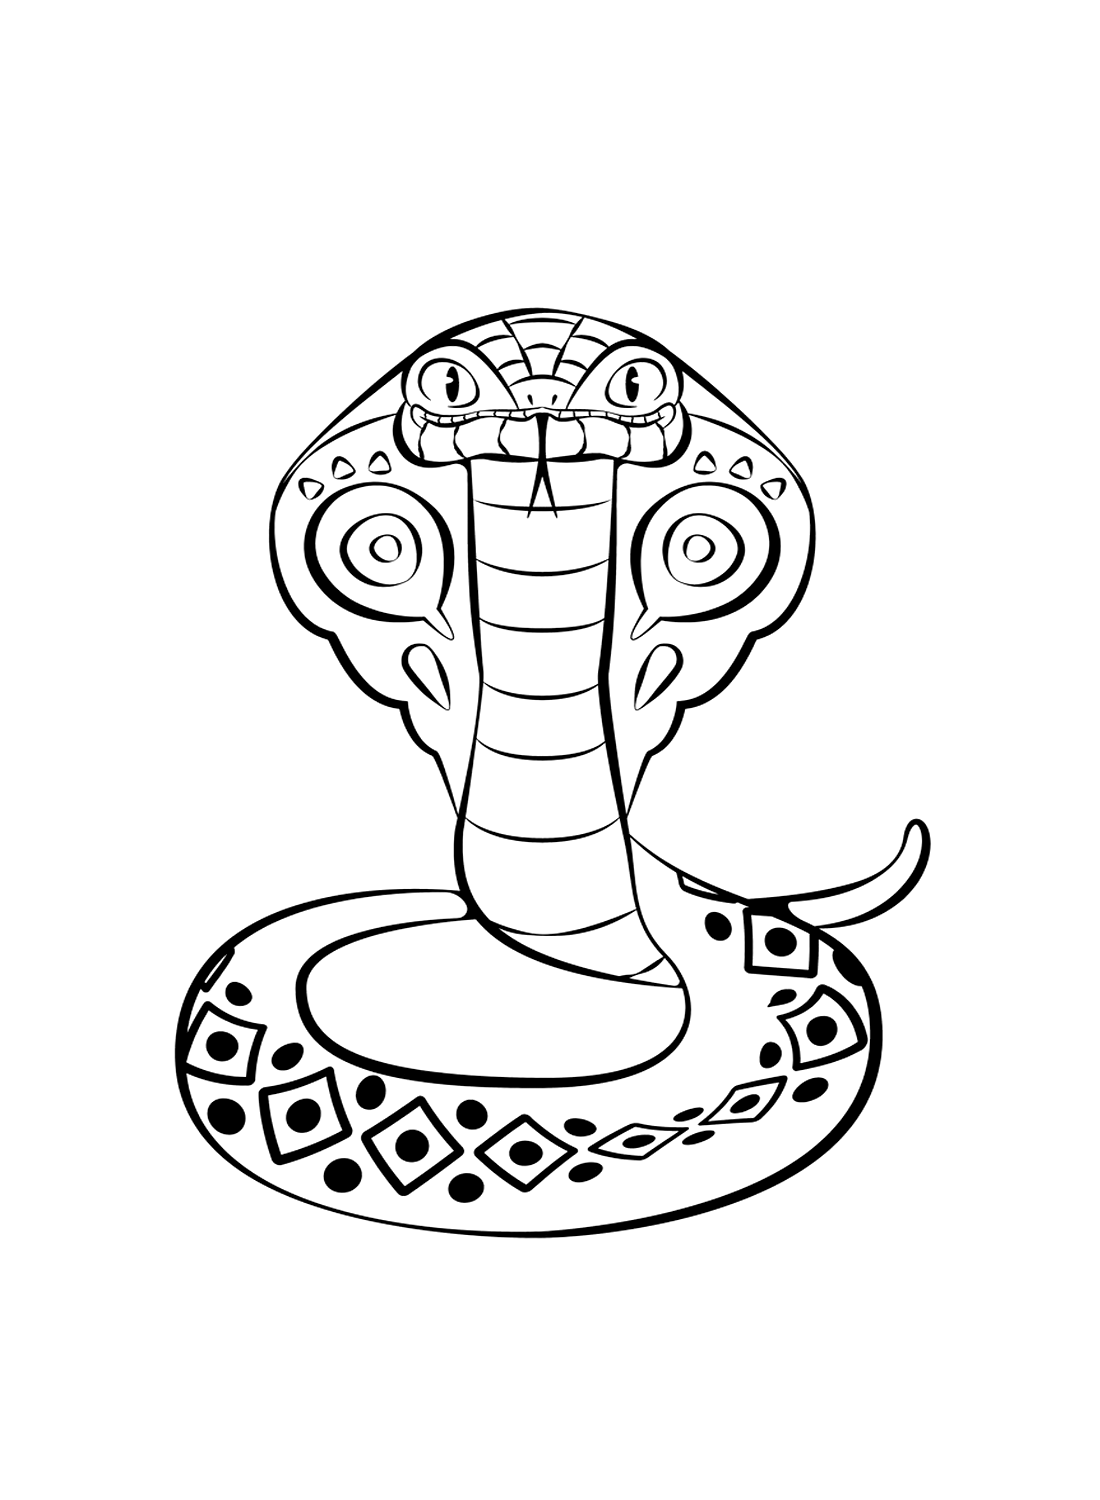 king cobra drawings